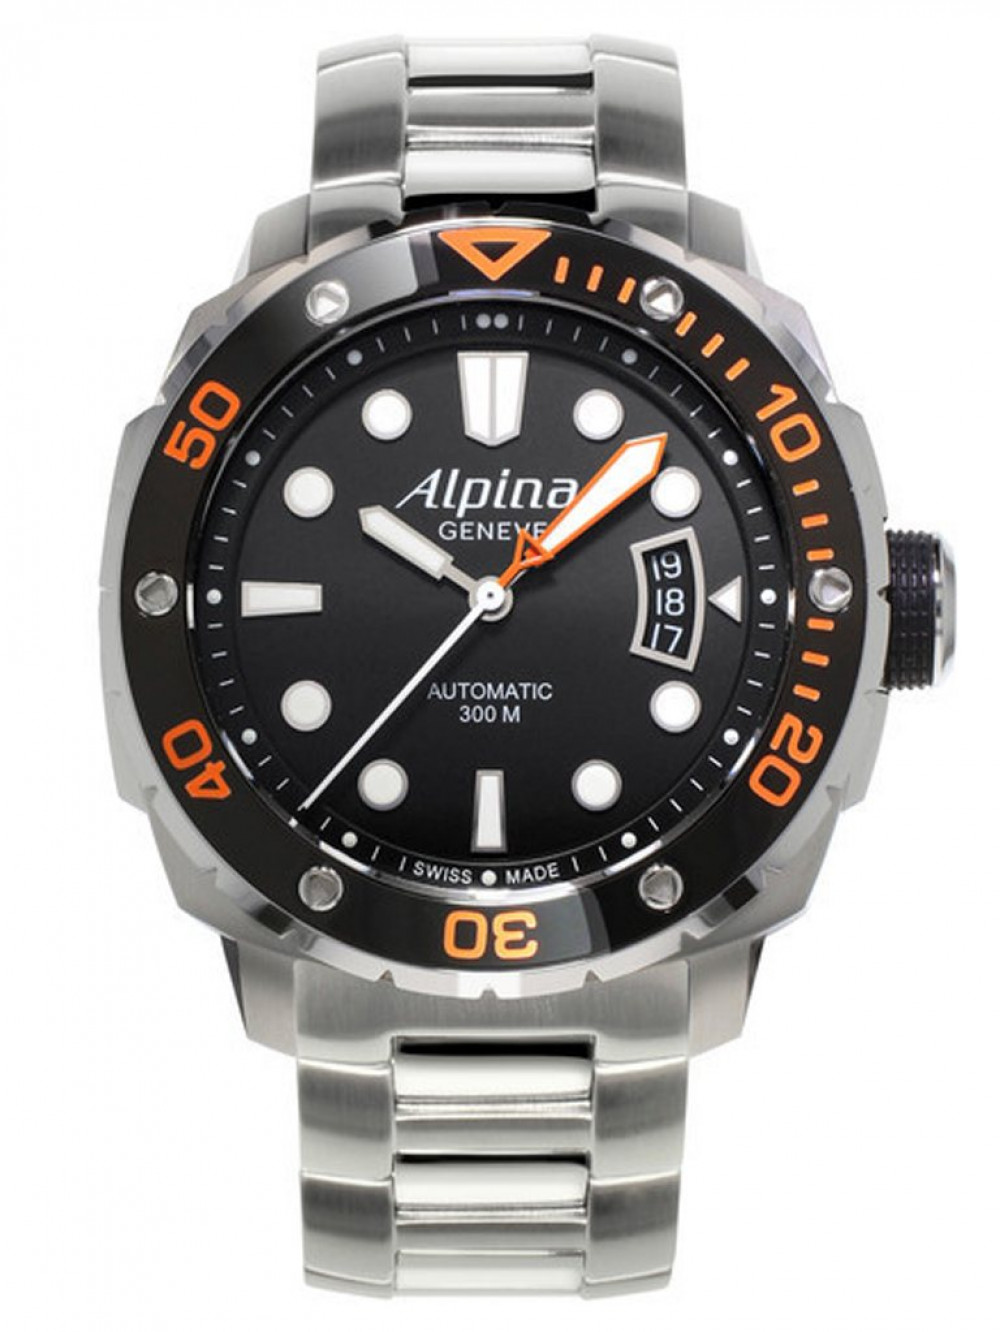 Zegarek firmy Alpina Genève, model Seastrong Diver 300 Automatic